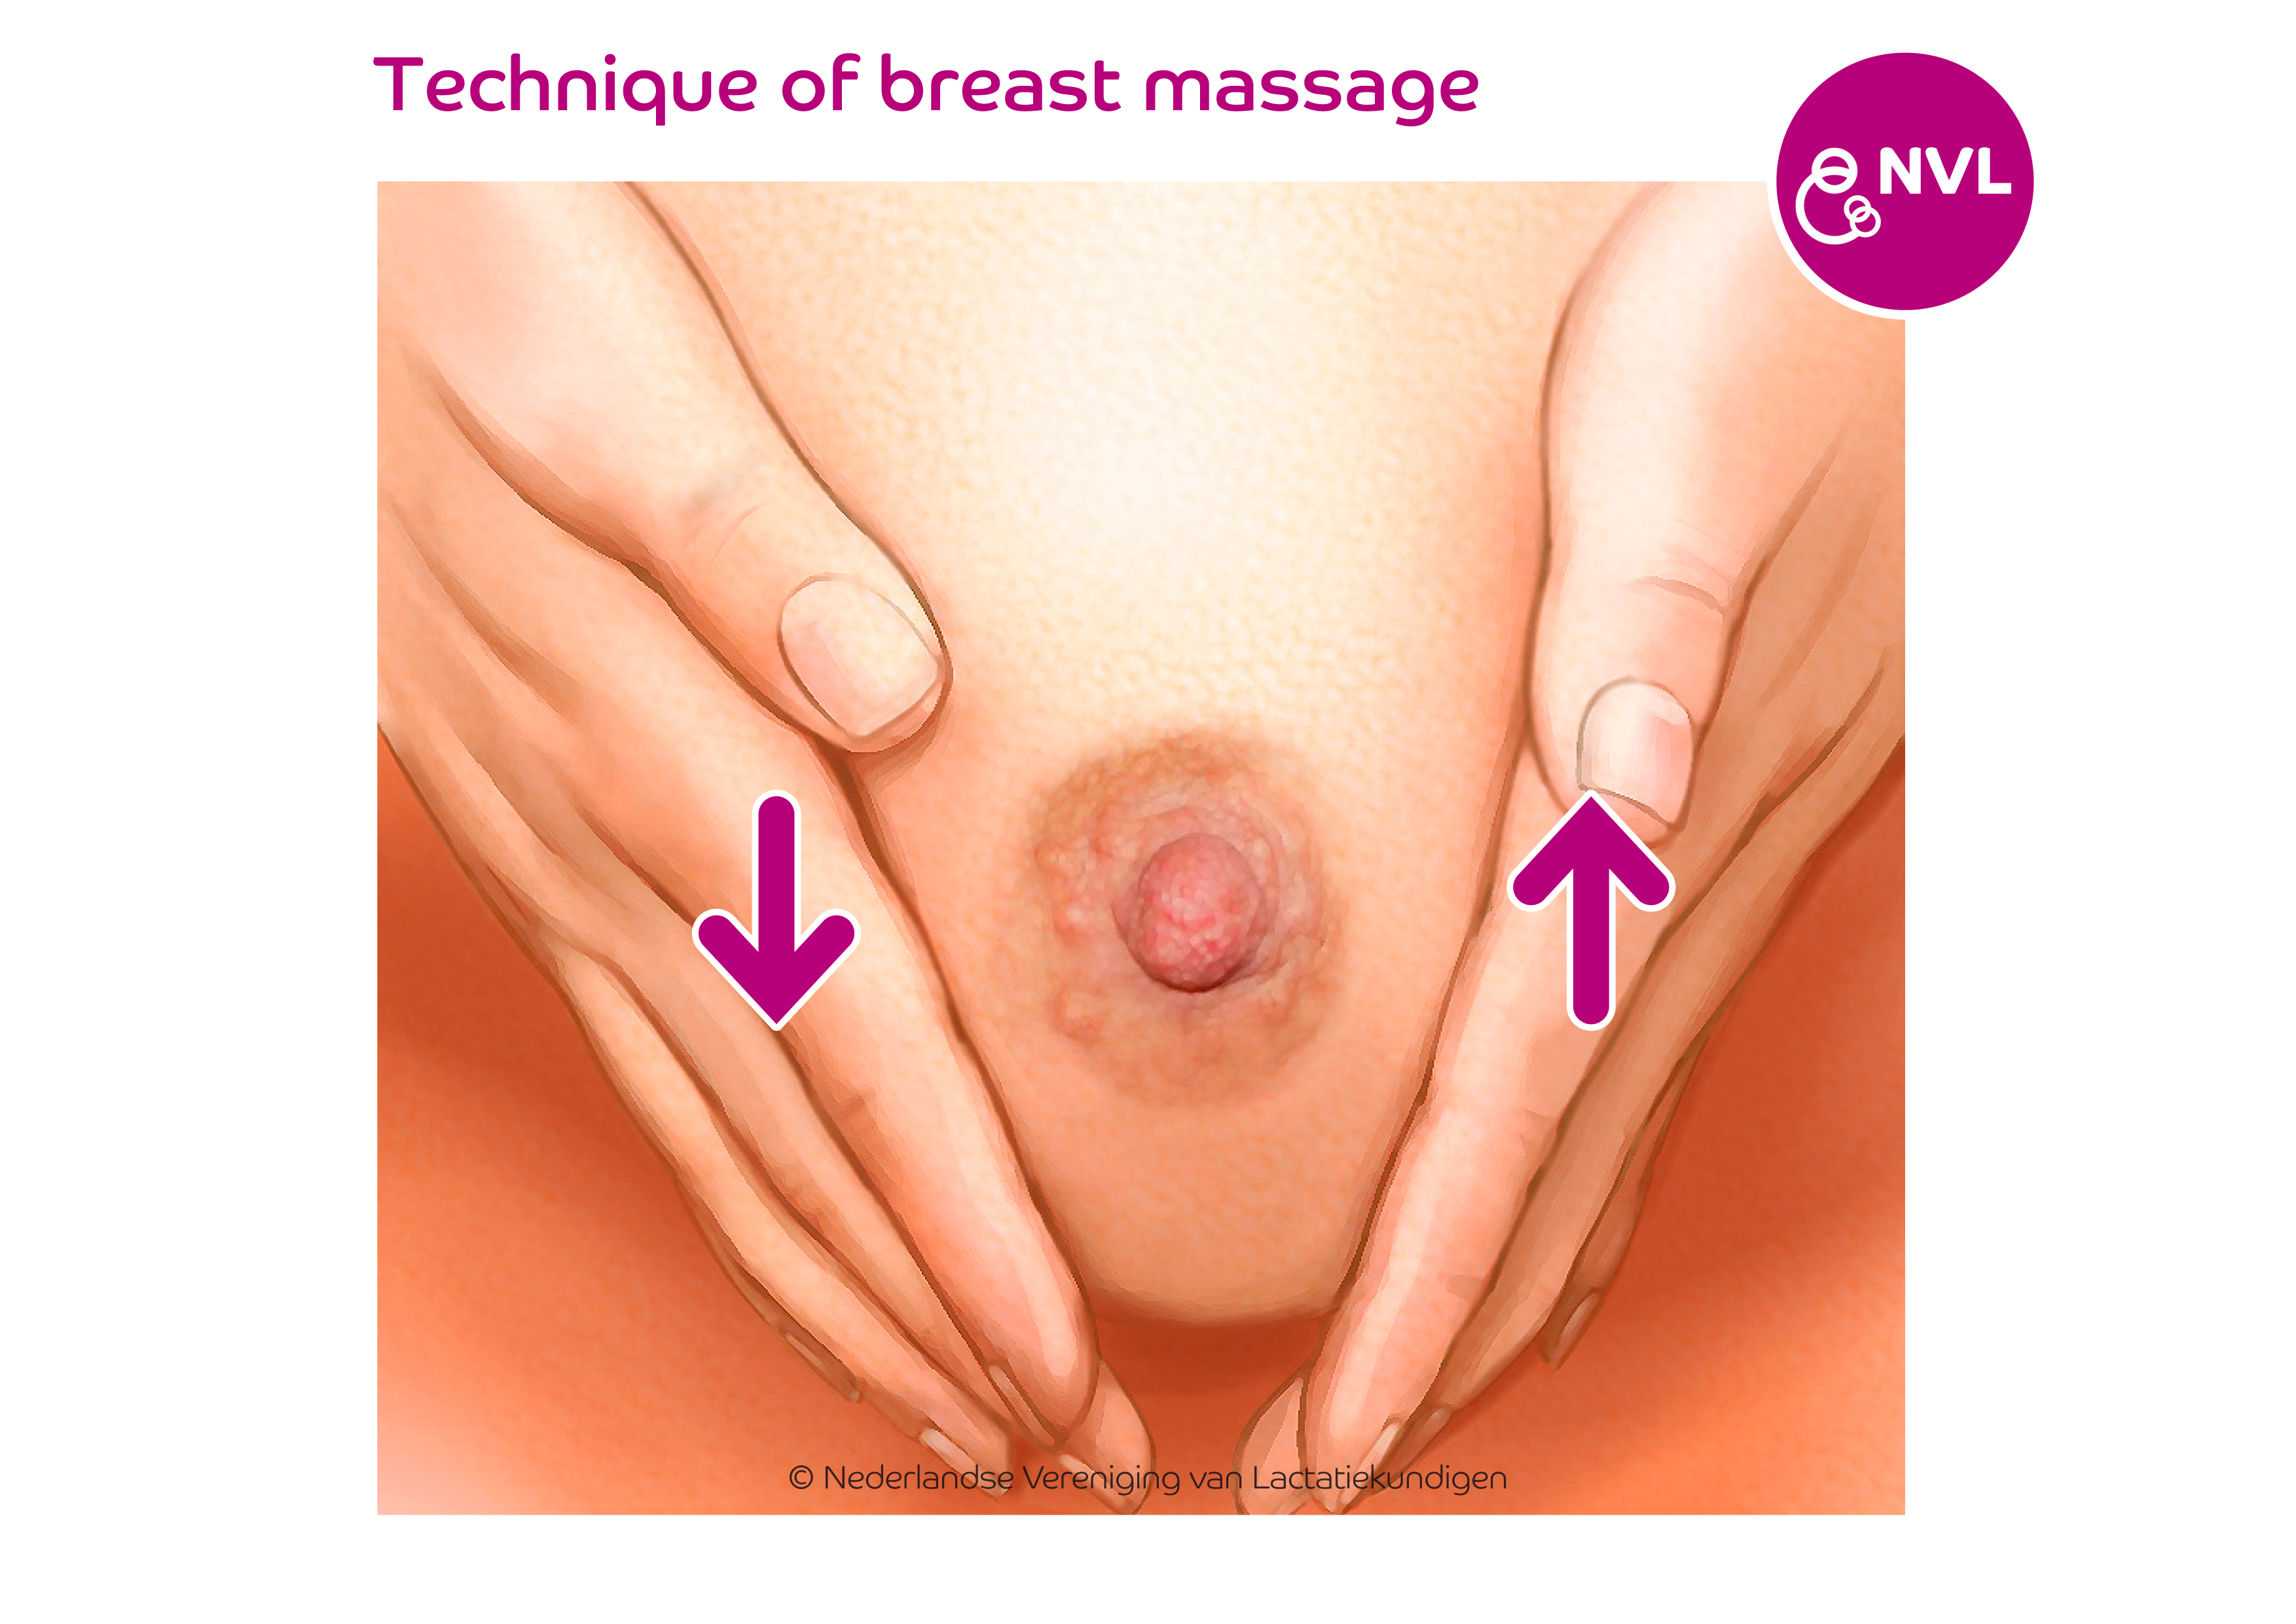 Breastmassage step 2 | NVL